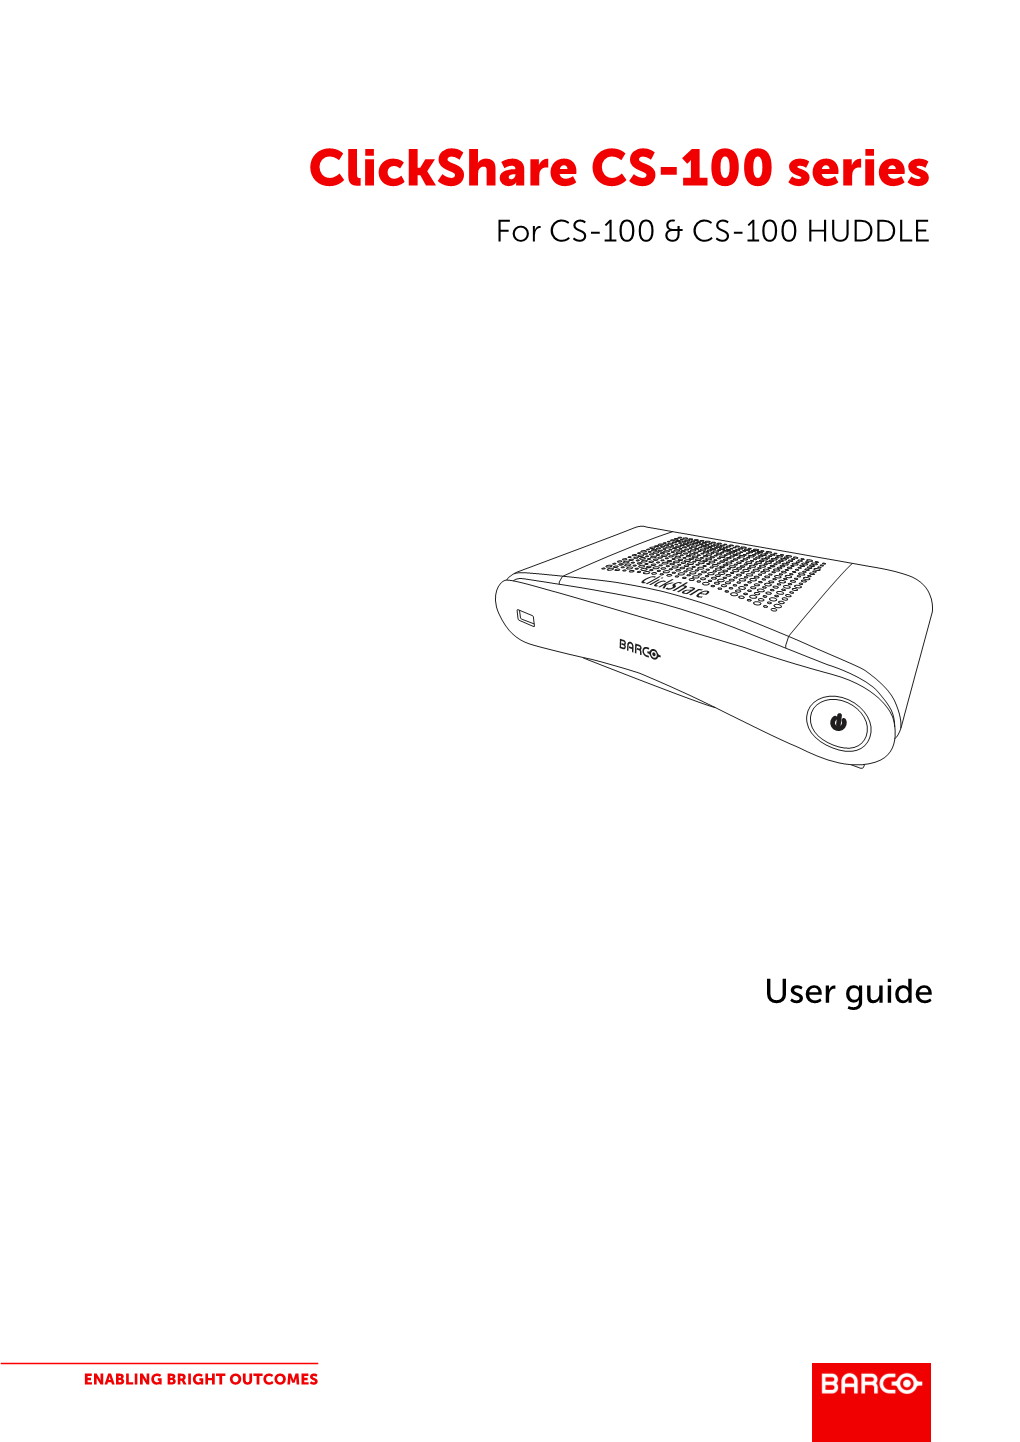 Clickshare CS-100 Series for CS-100 & CS-100 HUDDLE